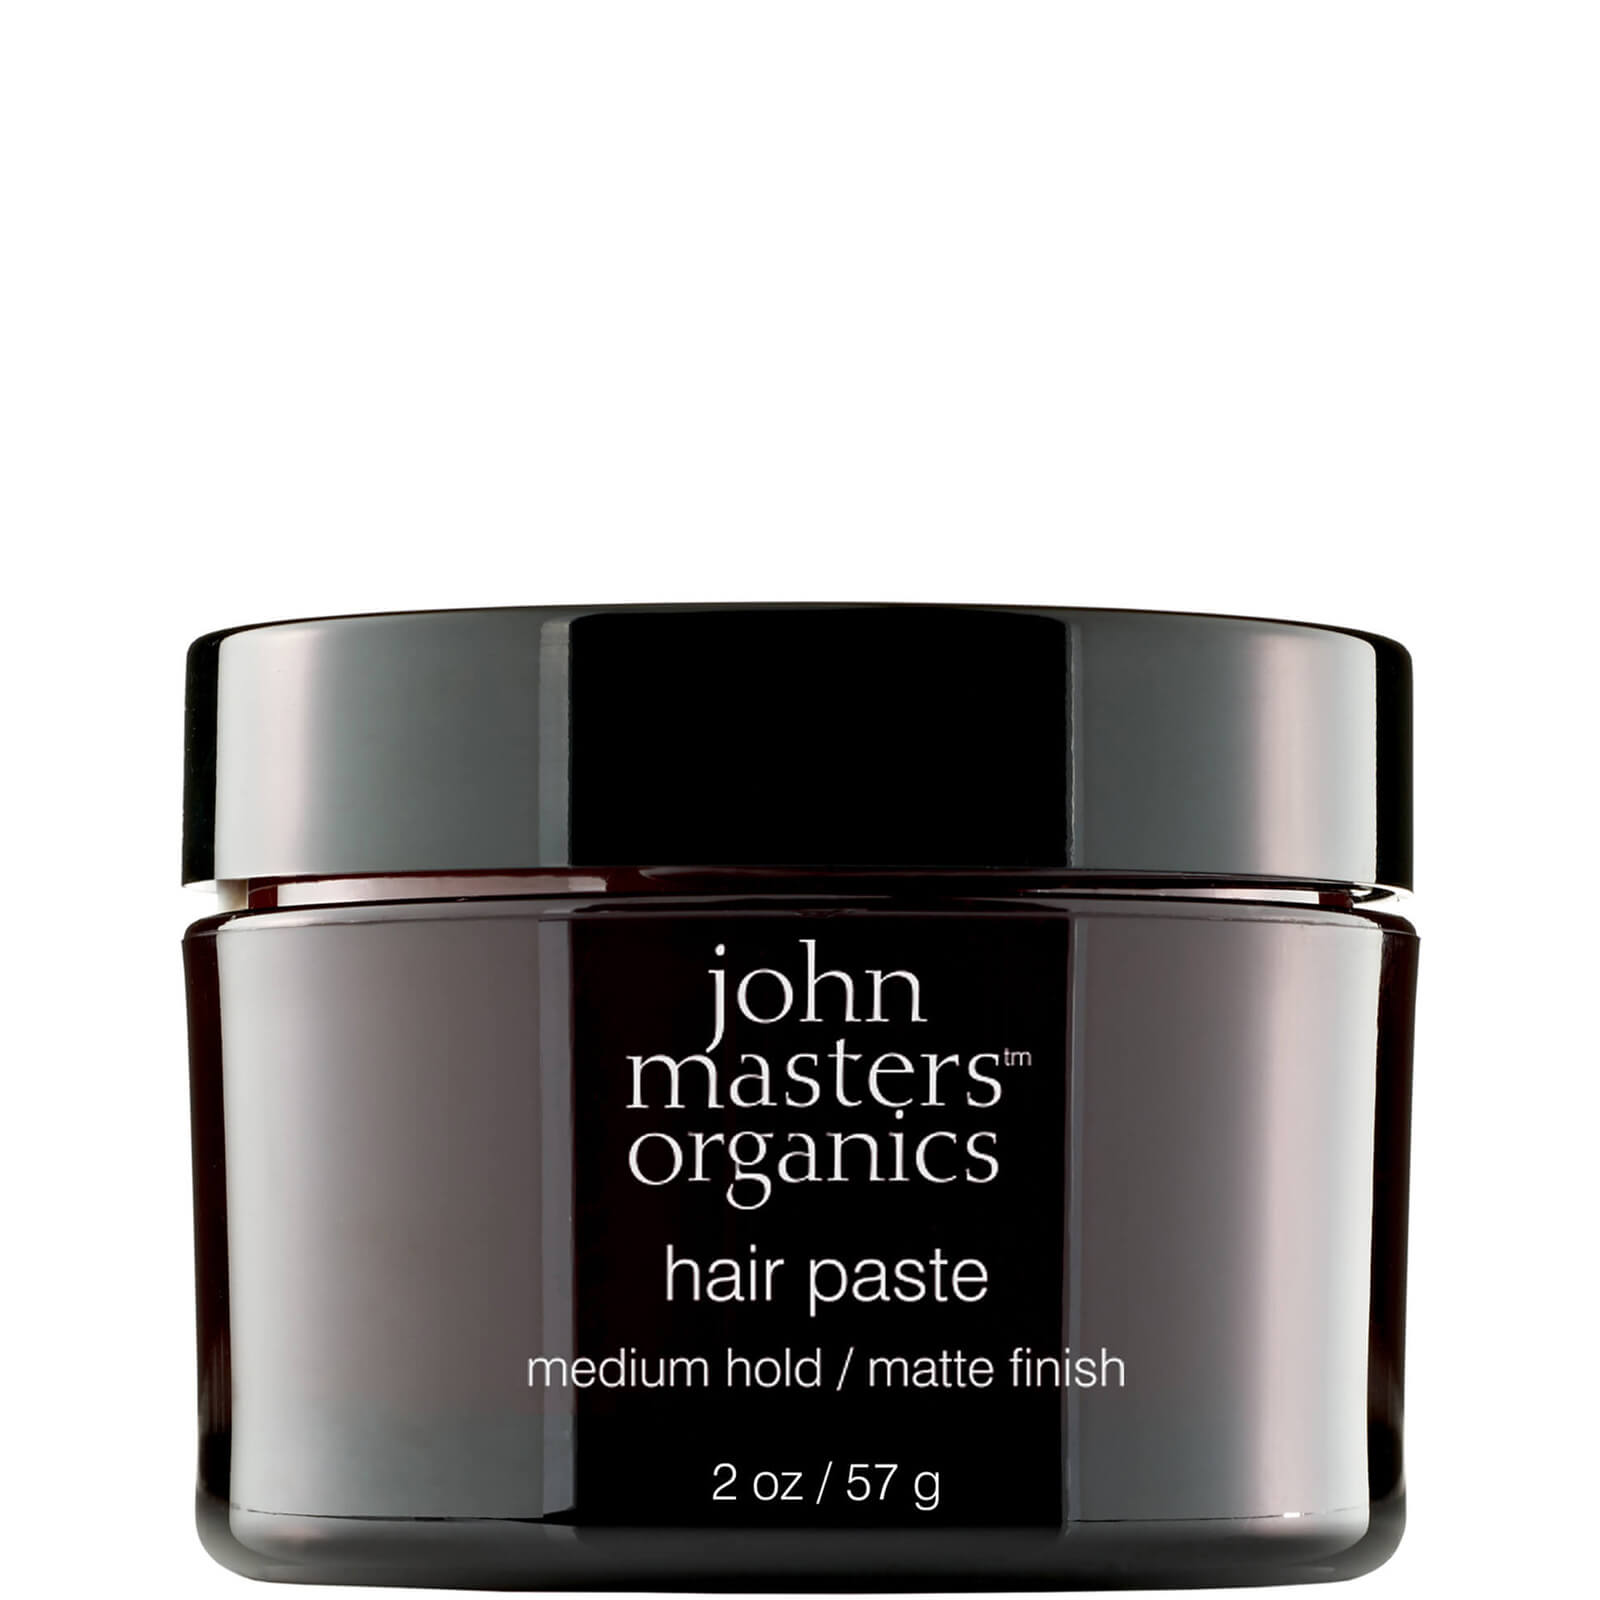 John Masters Organics Hair Paste 57g